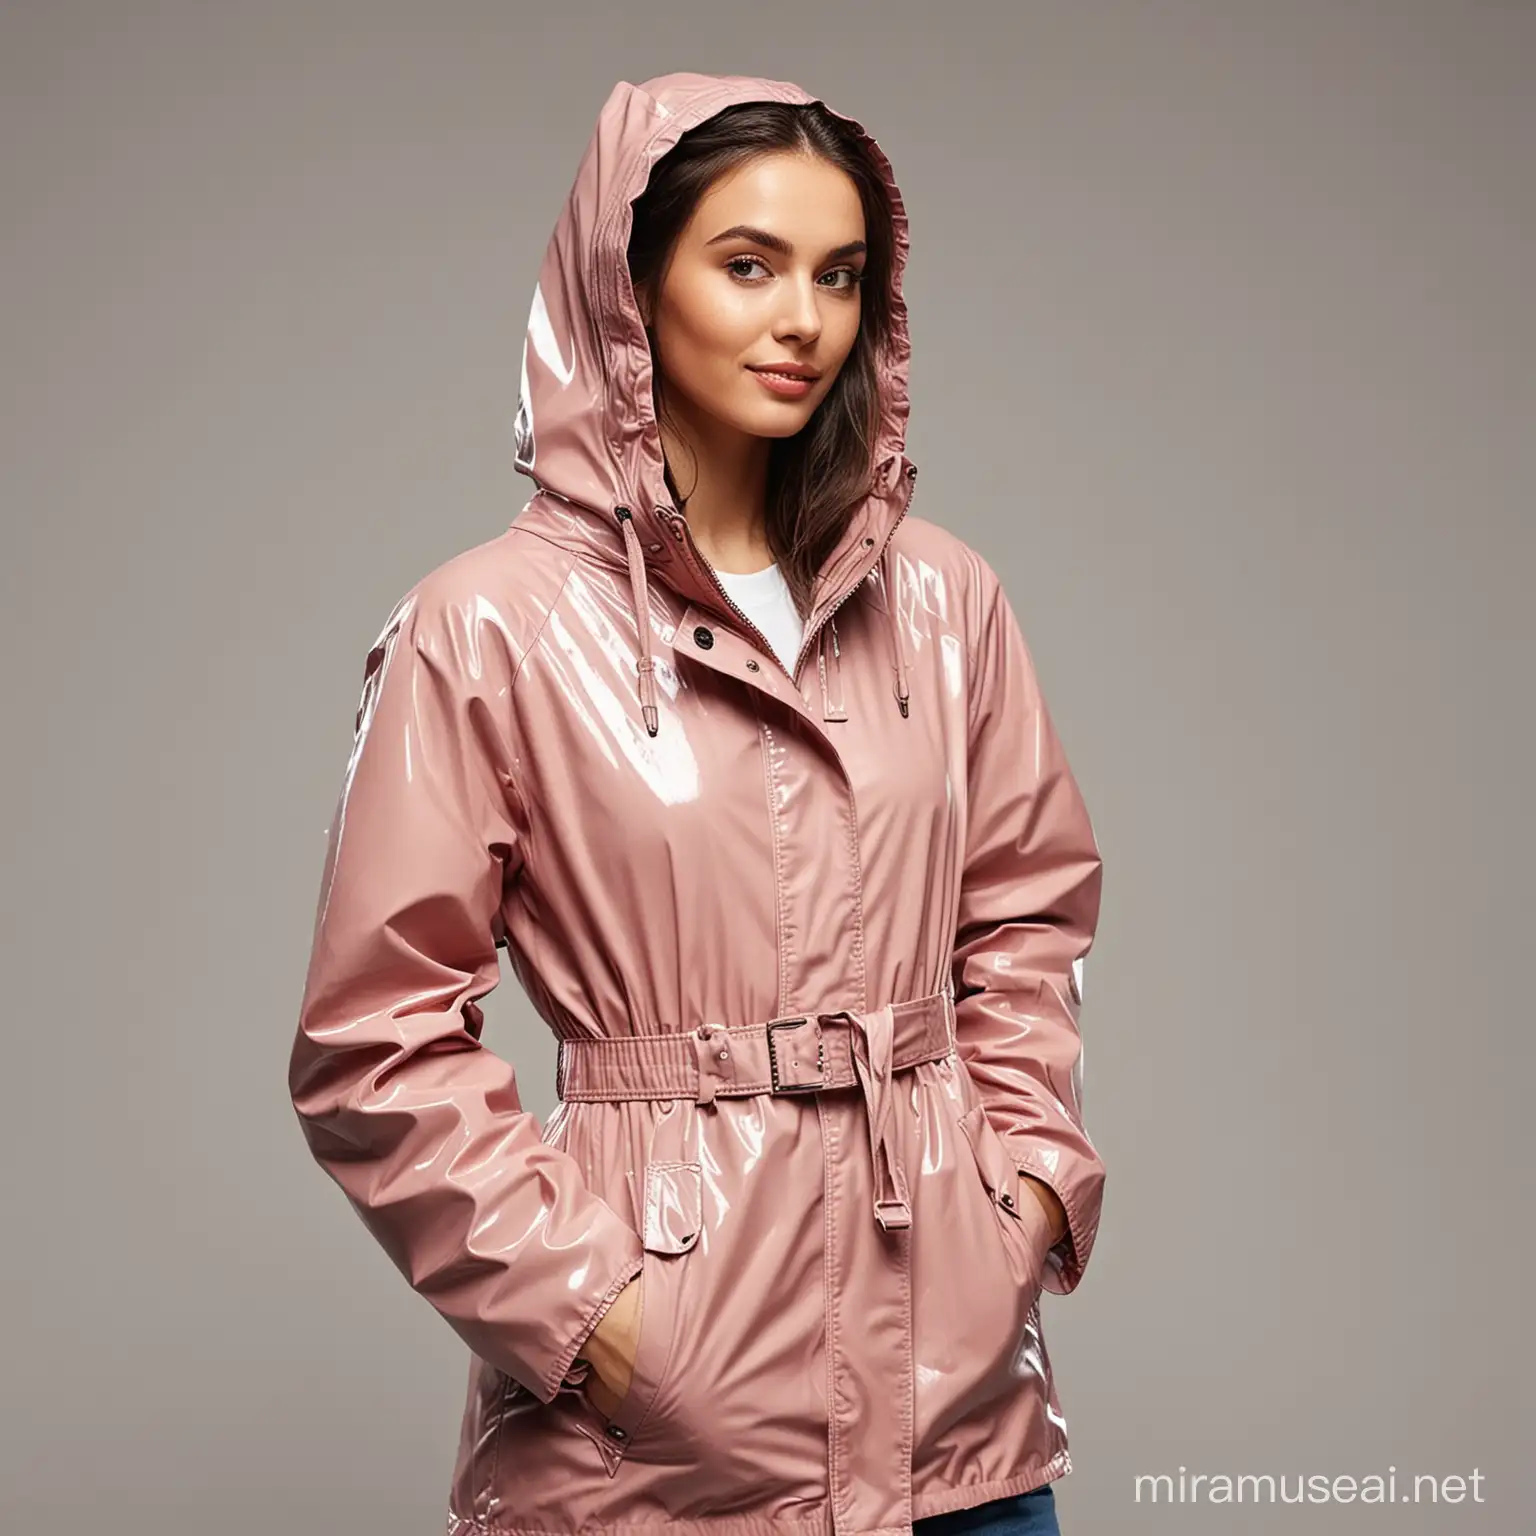 Woman in stylish rainjacket 
